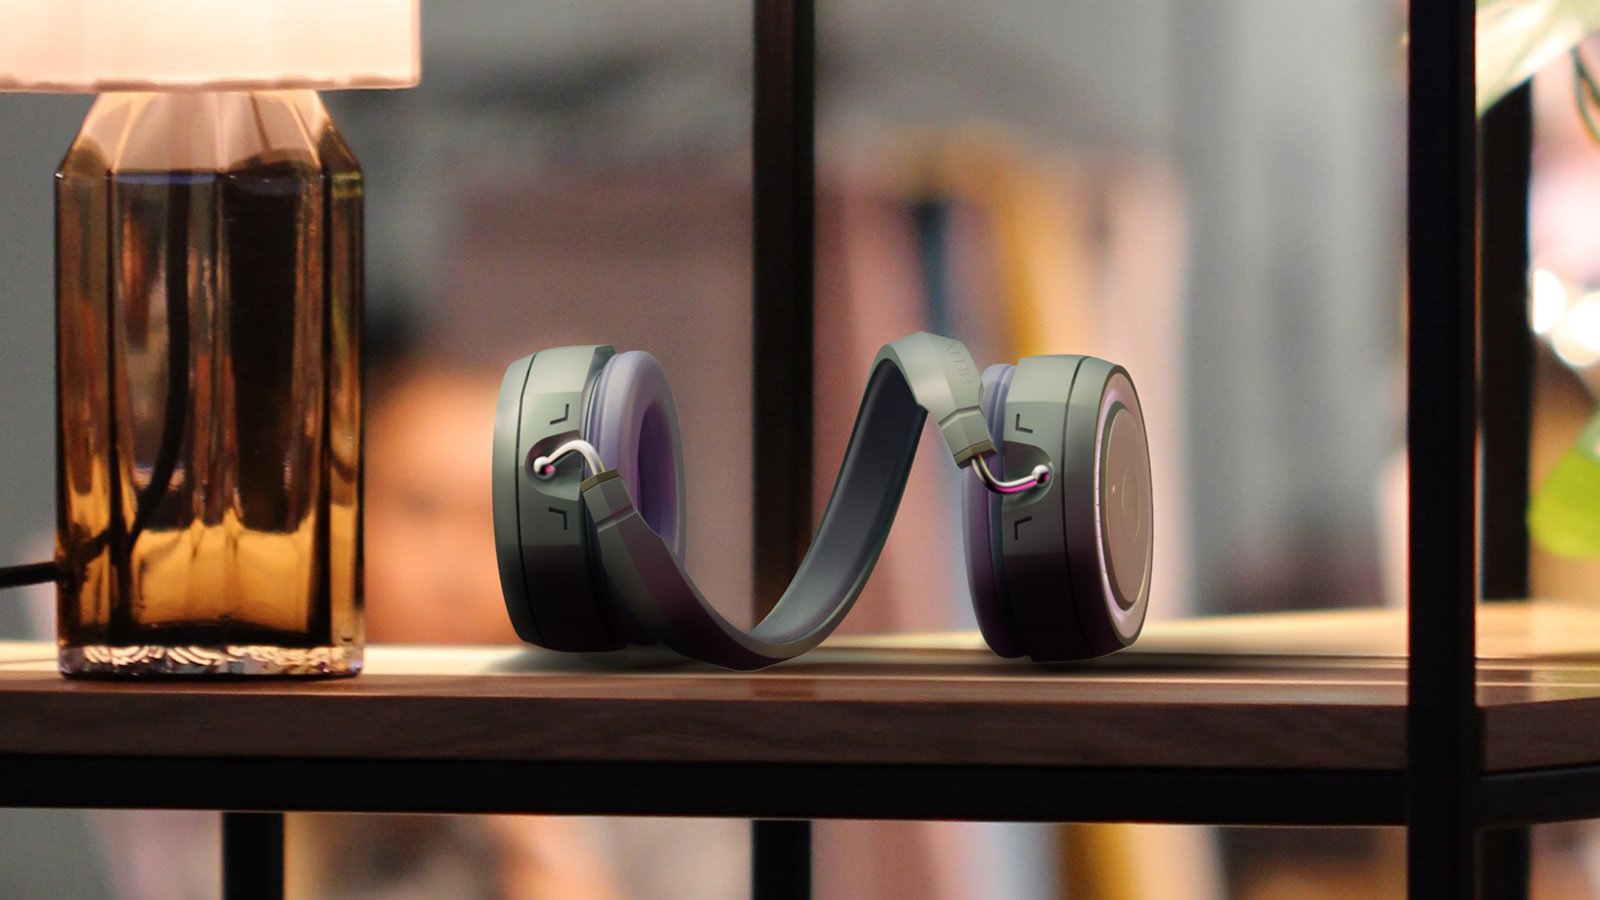 Junho Moon Helix multifunctional headphones transform into a speaker with a twist